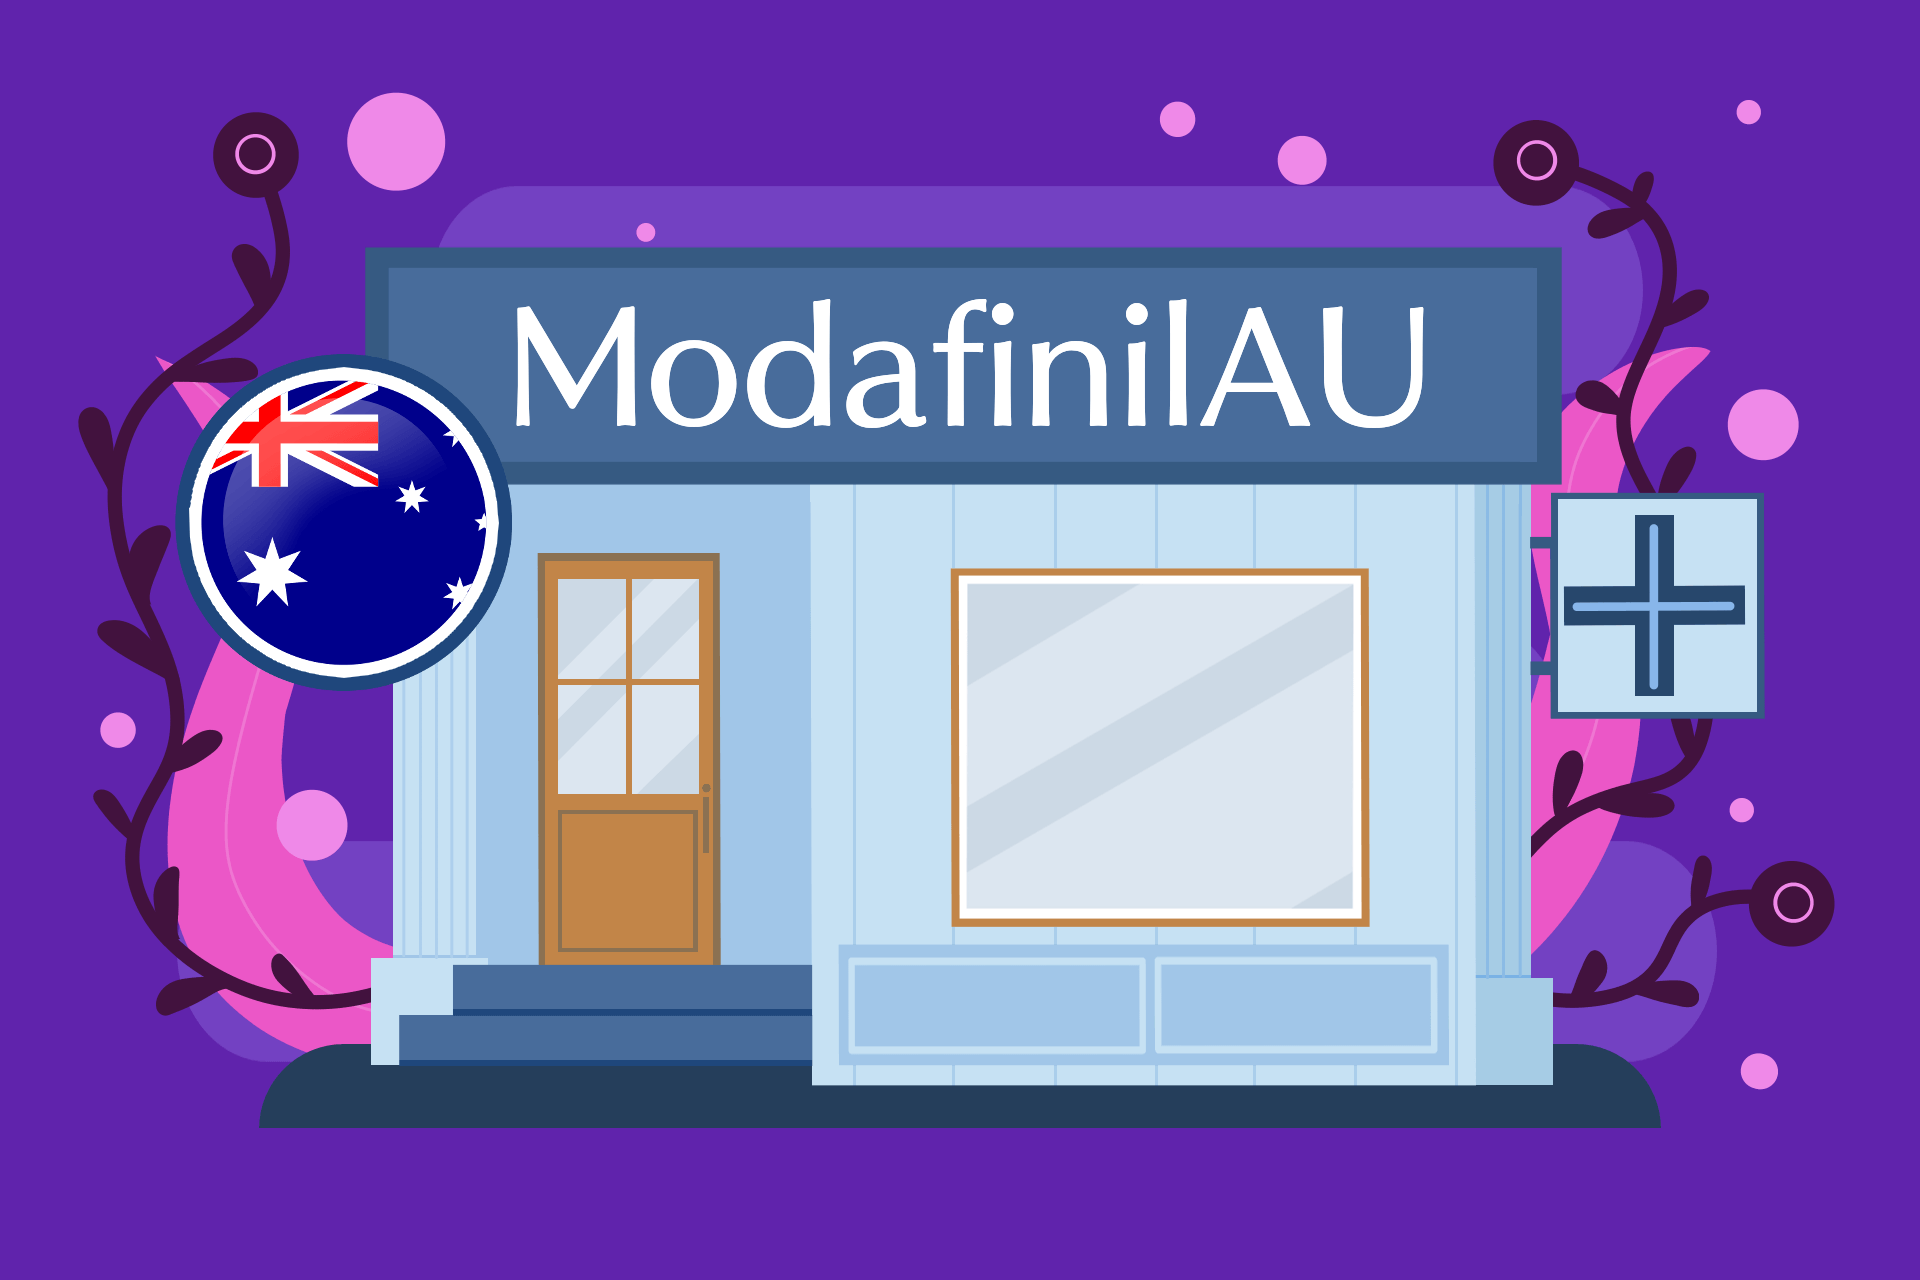 Modafinil.AU Review